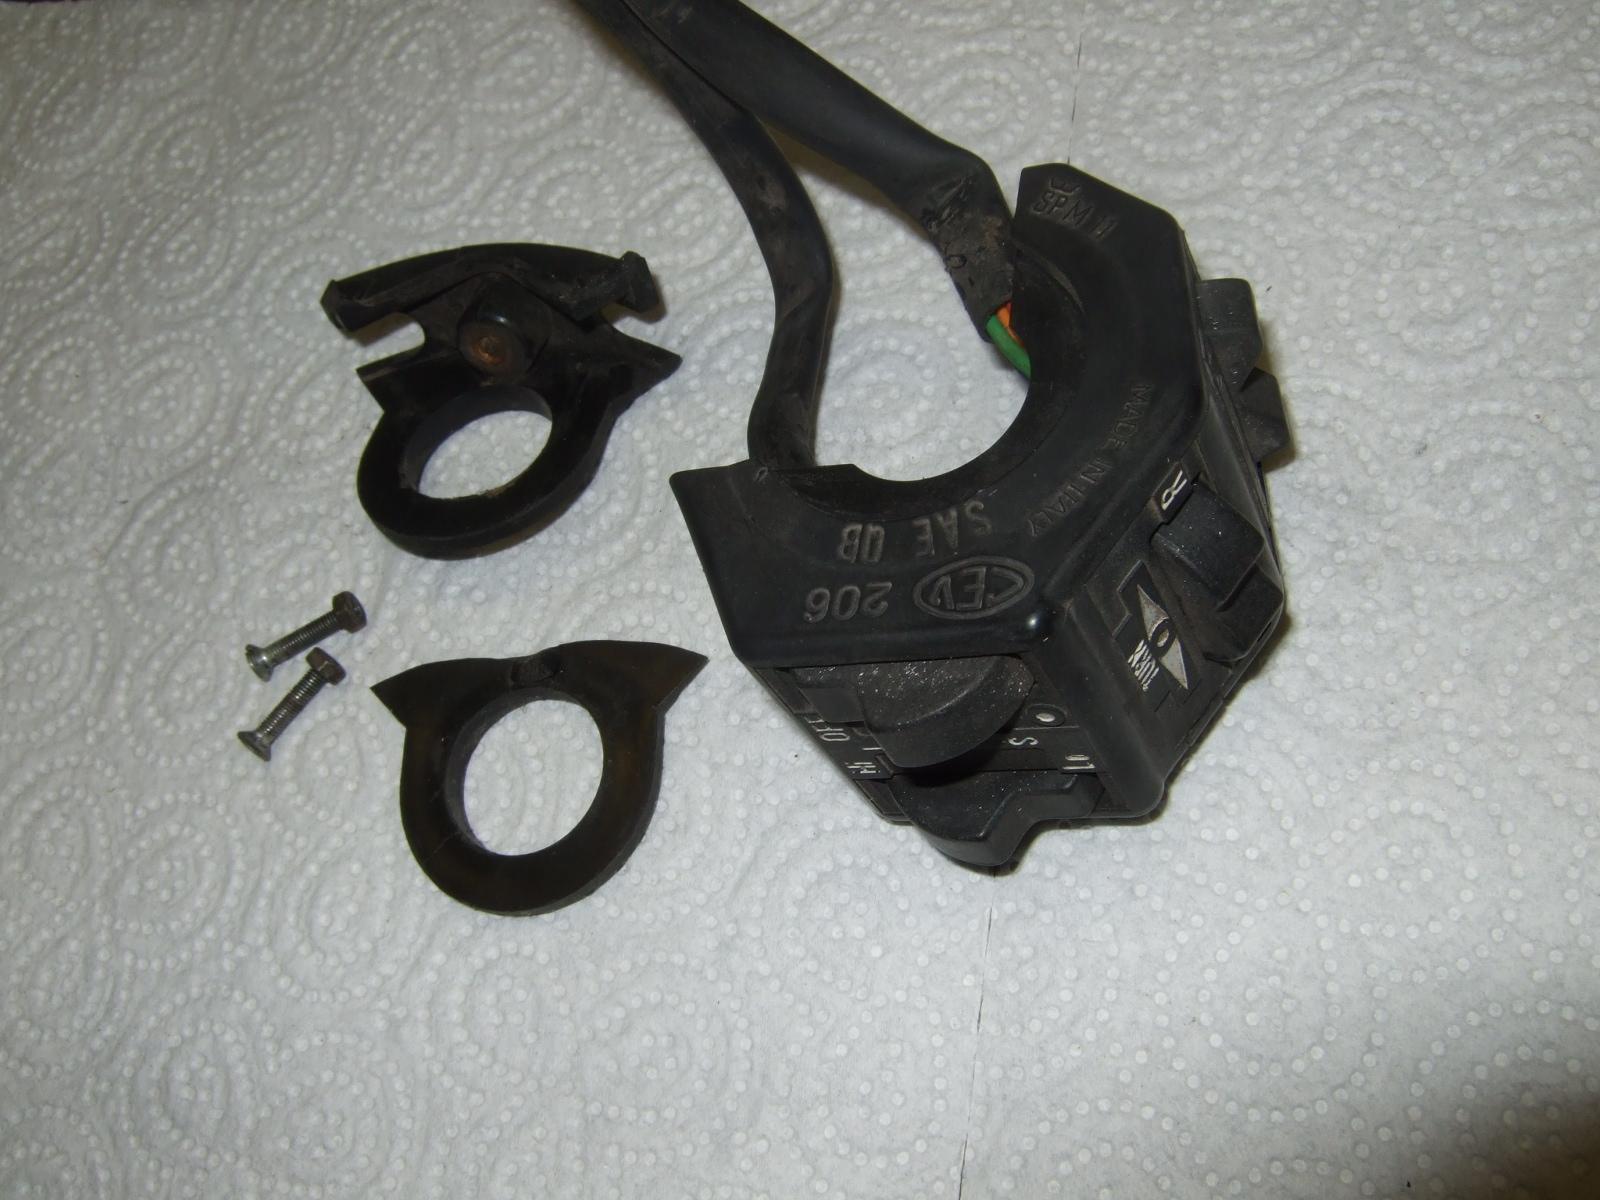 Broken clamp on CEV 206 switch